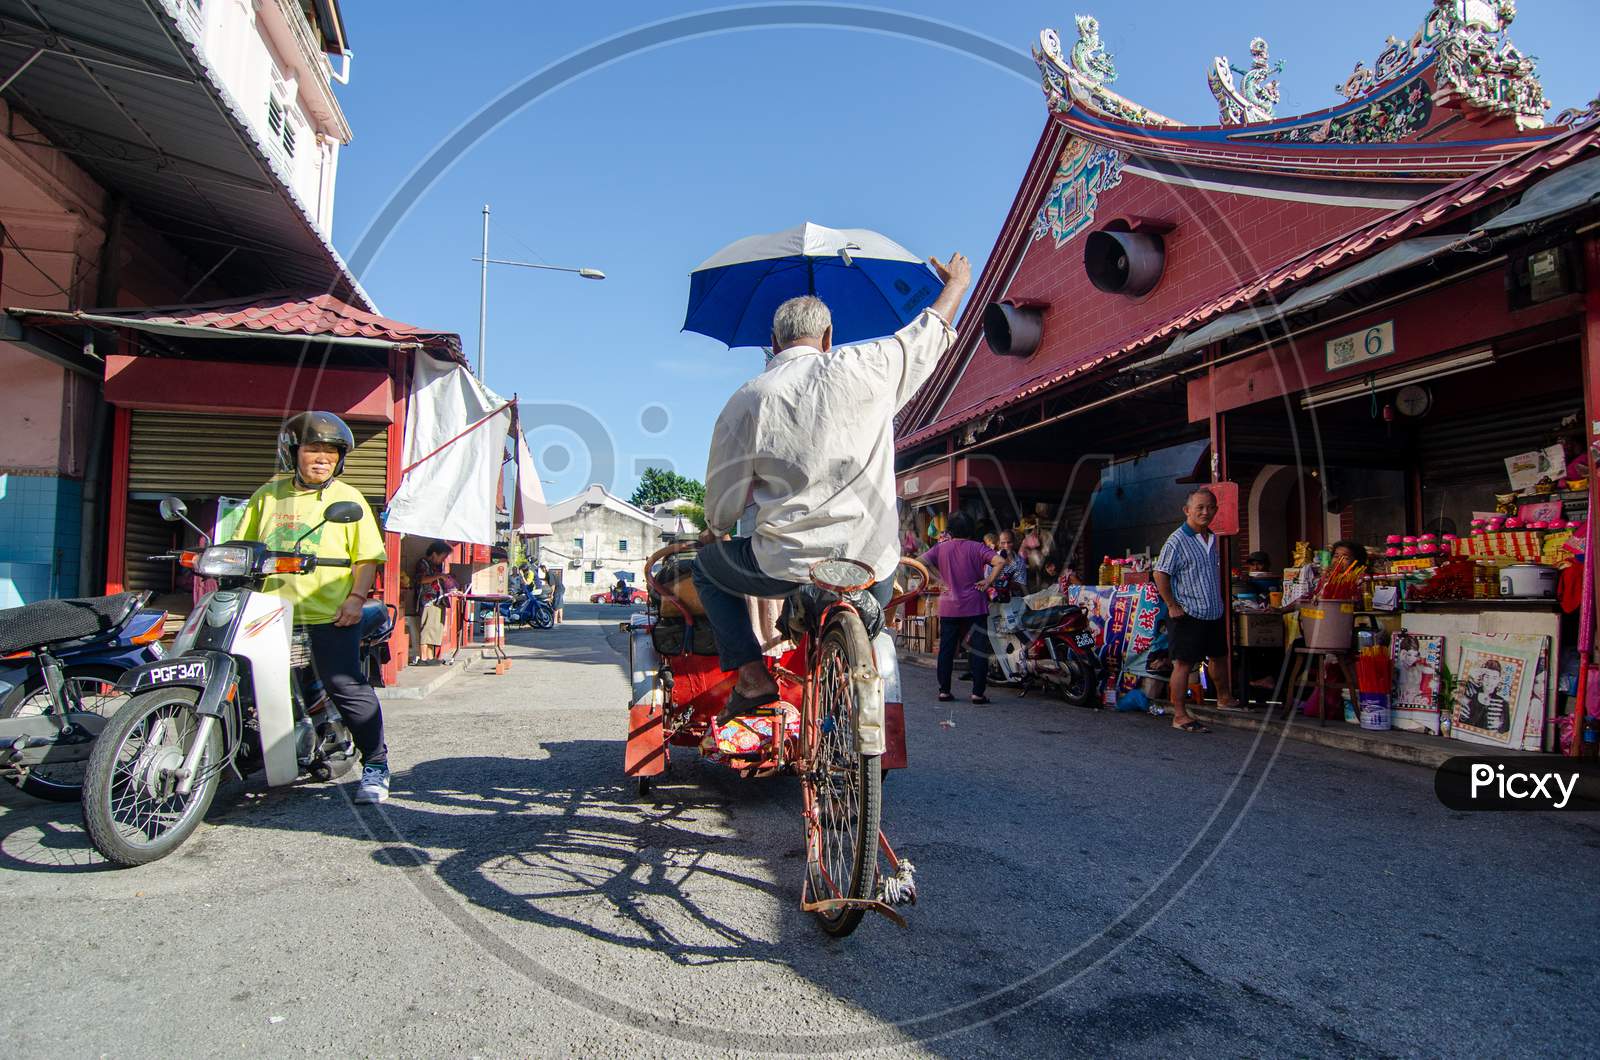 Rickshaw Ride Near The Goddess Of Mercy Temple